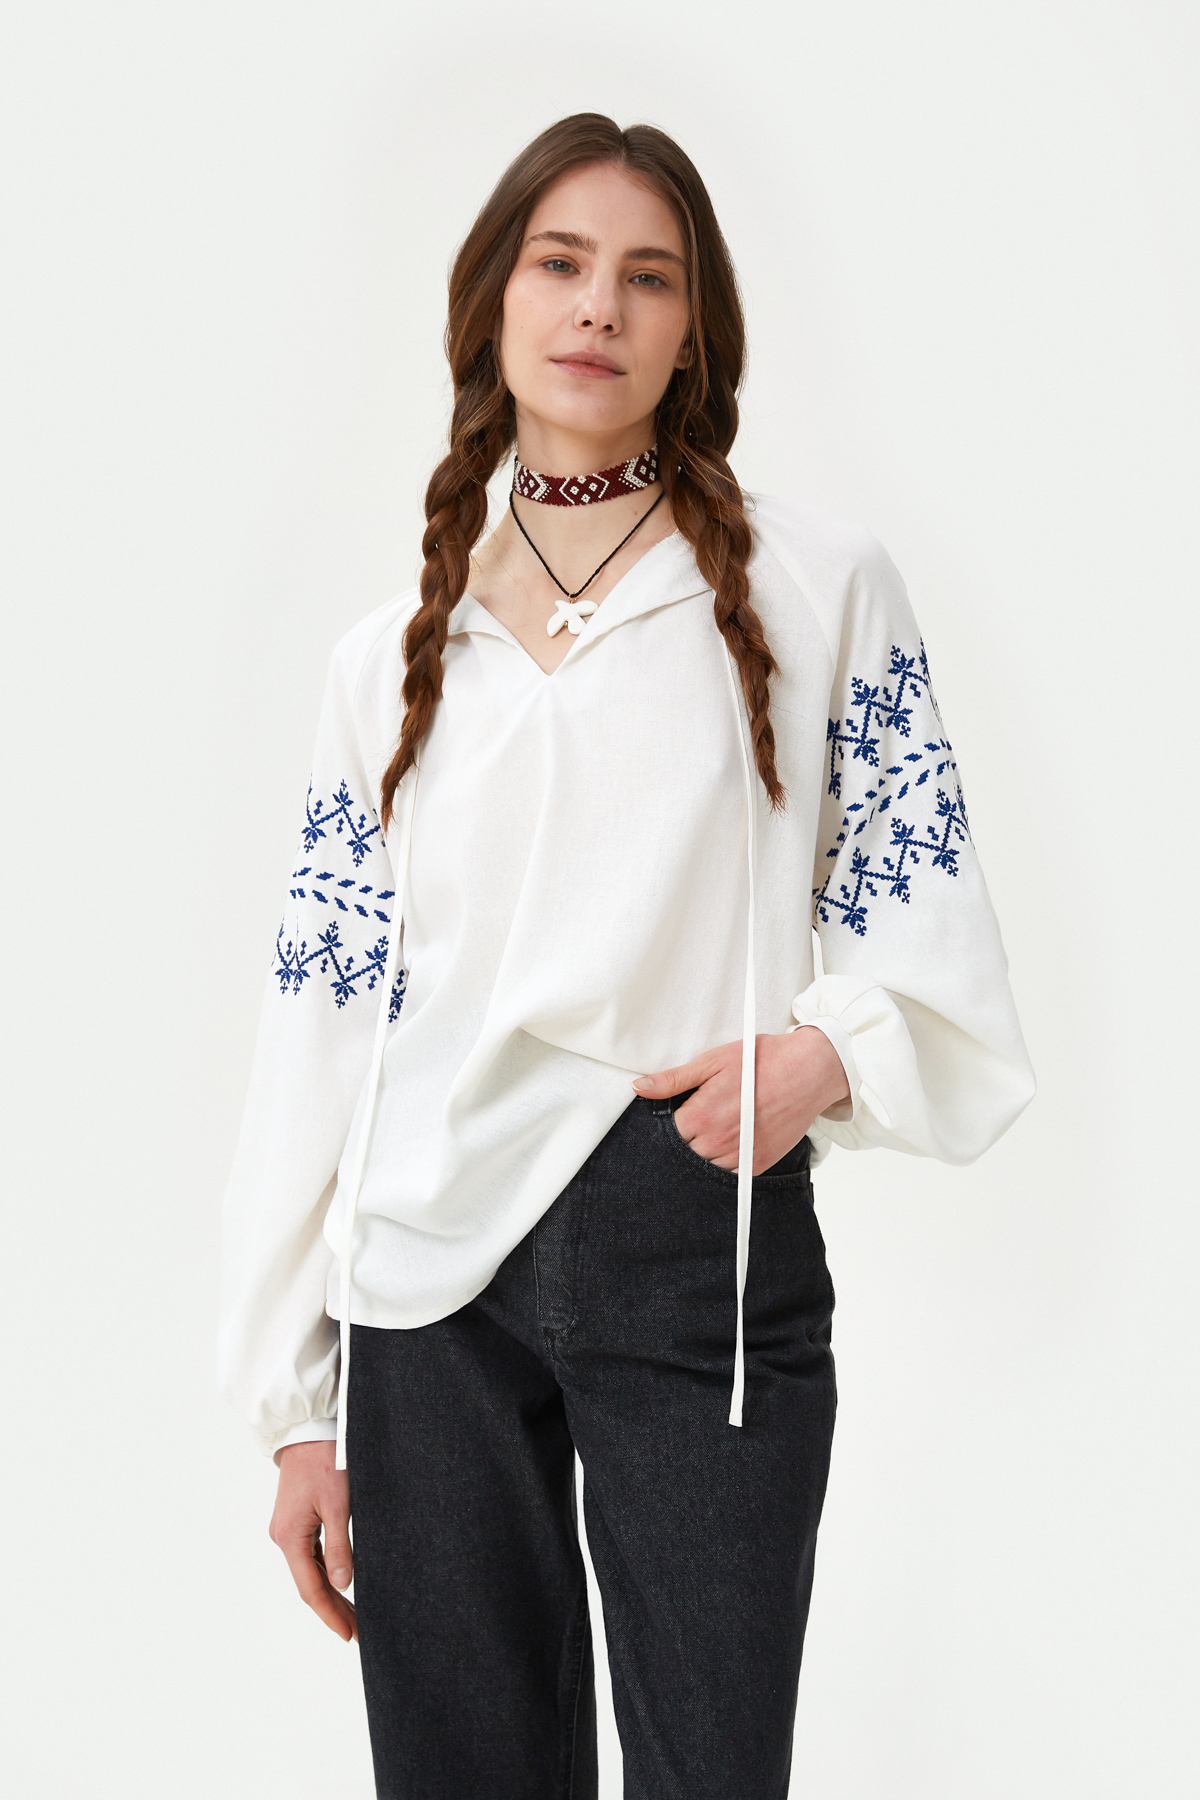 Milky linen vyshyvanka shirt with zigzags embroidery, photo 5